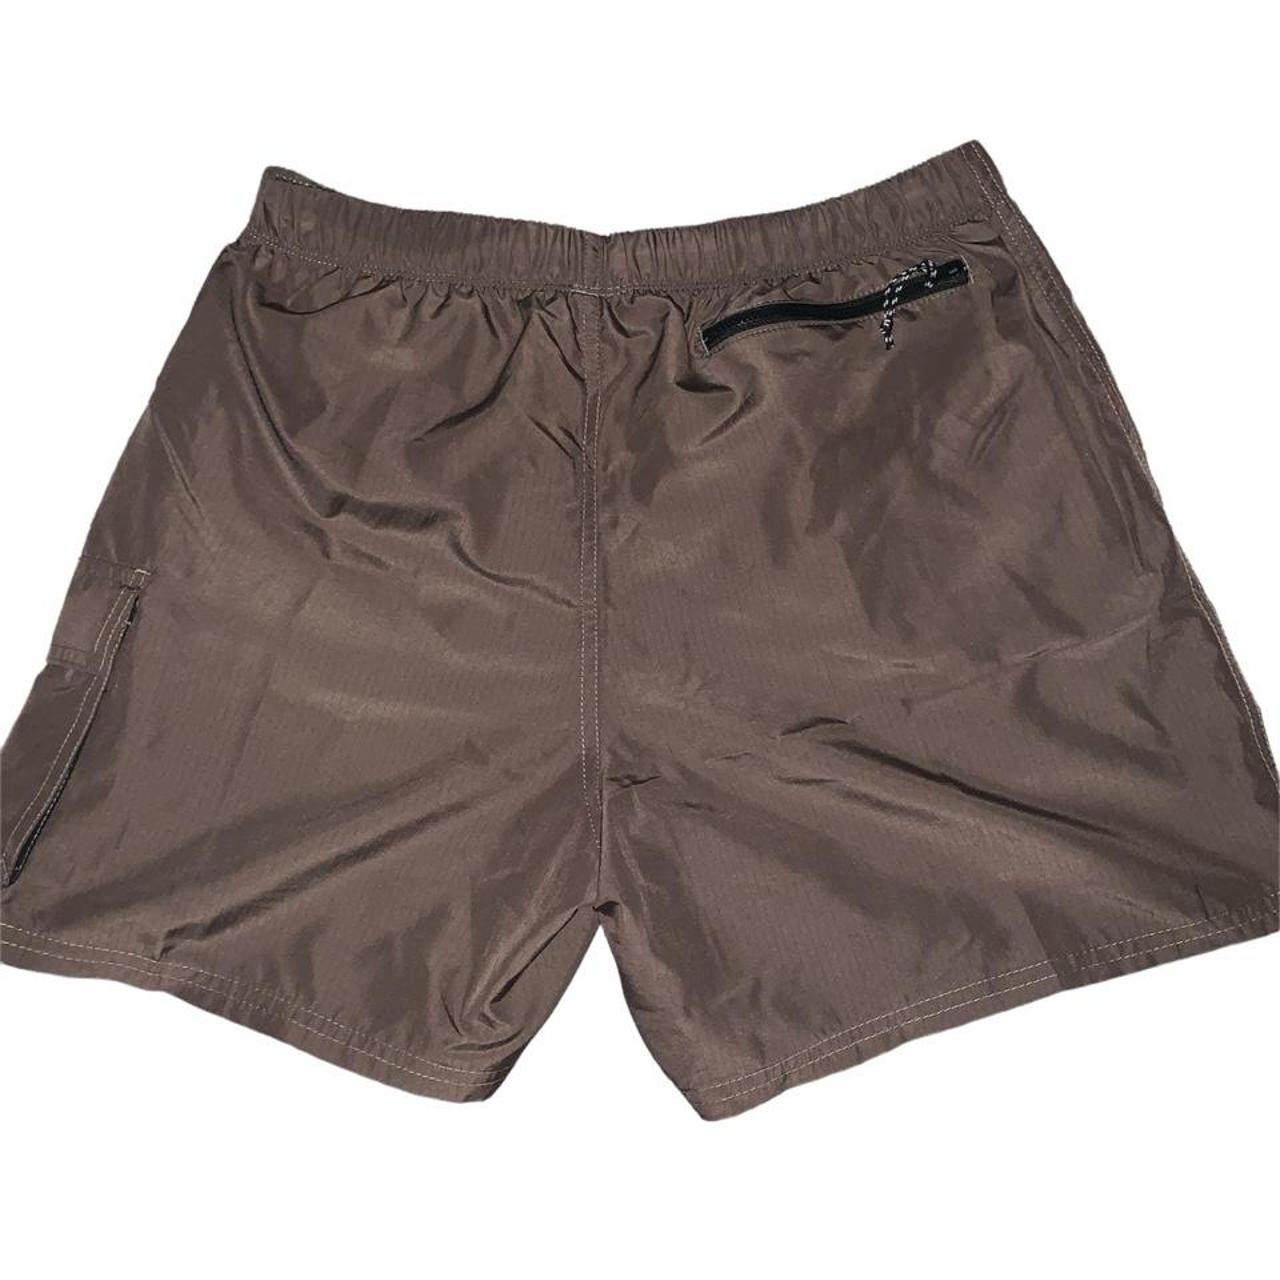 Nike Men's Brown Swim-briefs-shorts (2)